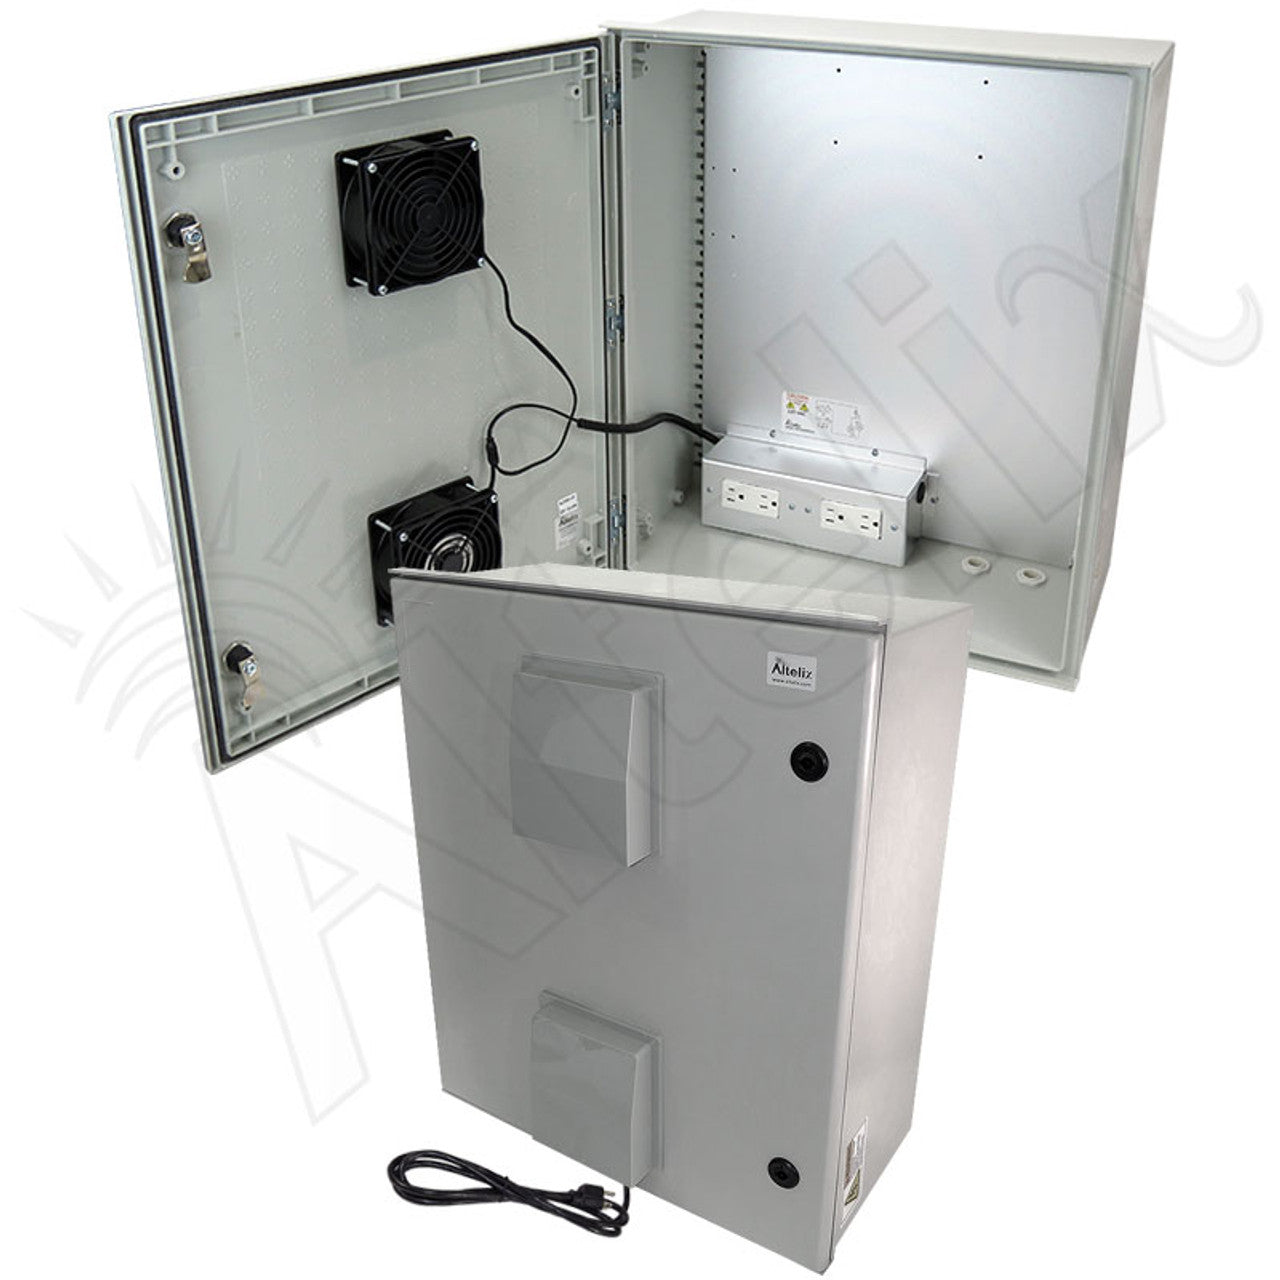 Altelix Vented Fiberglass Weatherproof NEMA Enclosure with Cooling Fan, 200W Heater, 120 VAC Outlets & Power Cord